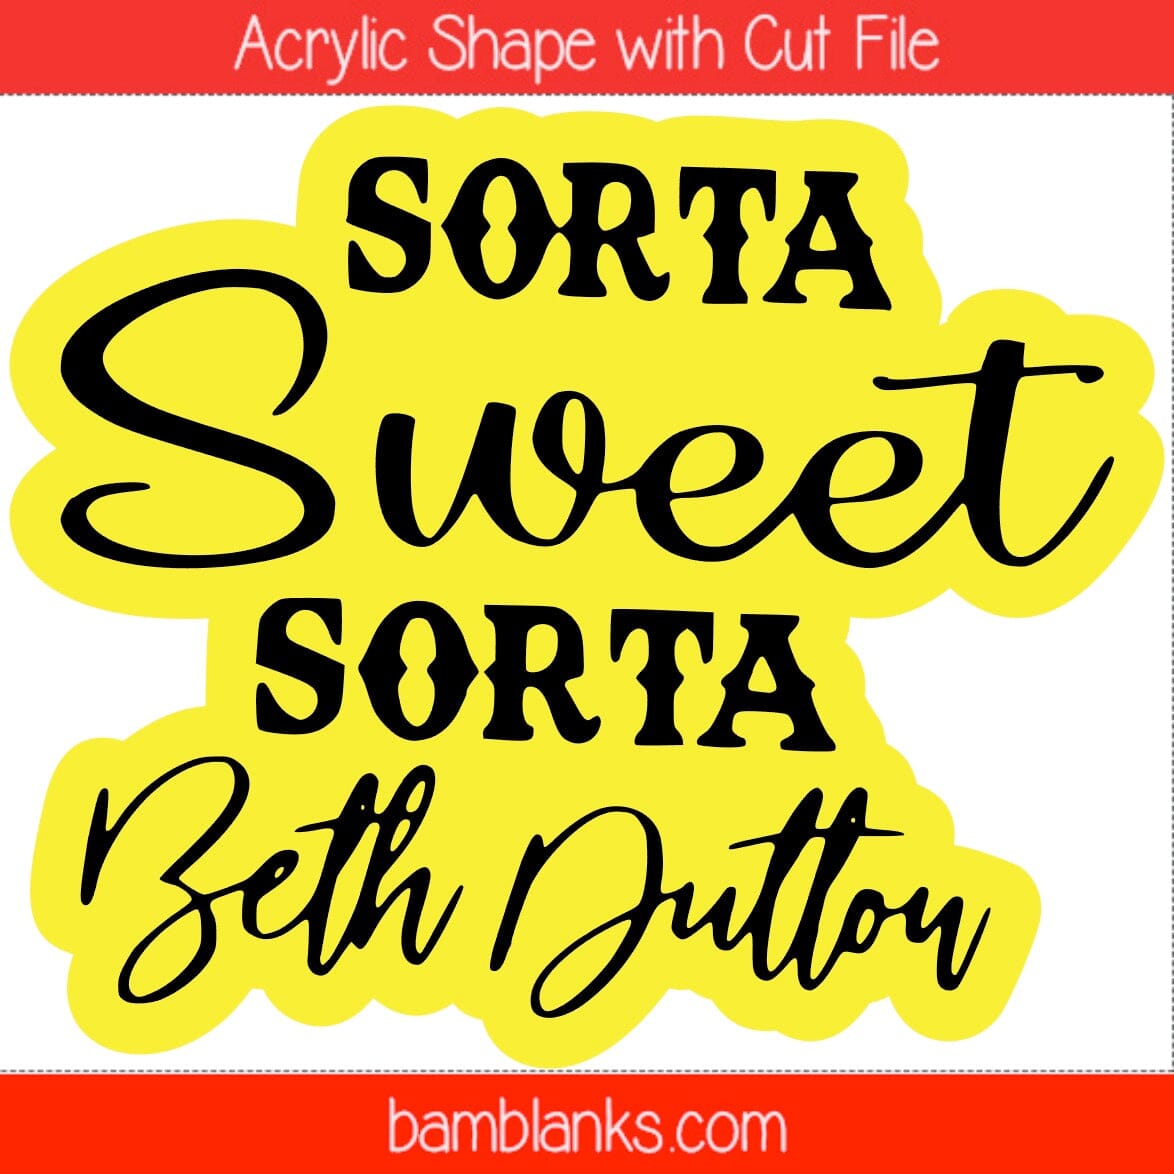 Sorta Sweet Sorta Beth Dutton - Acrylic Shape #753